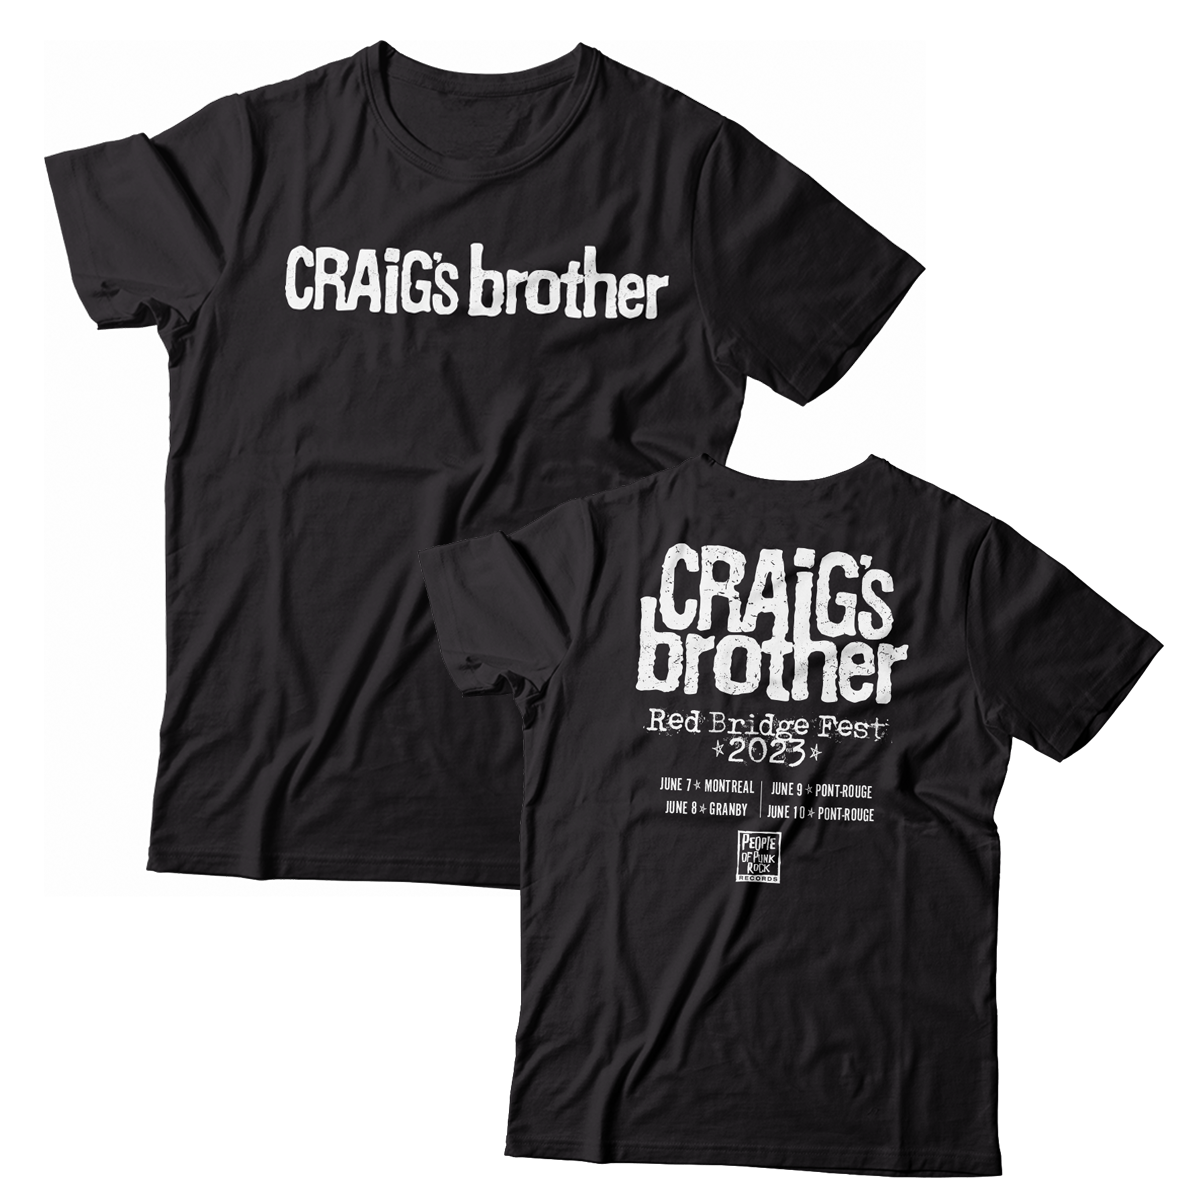 CRAIG'S BROTHER - "Red Bridge Fest 2023" (Black) (T-Shirt)